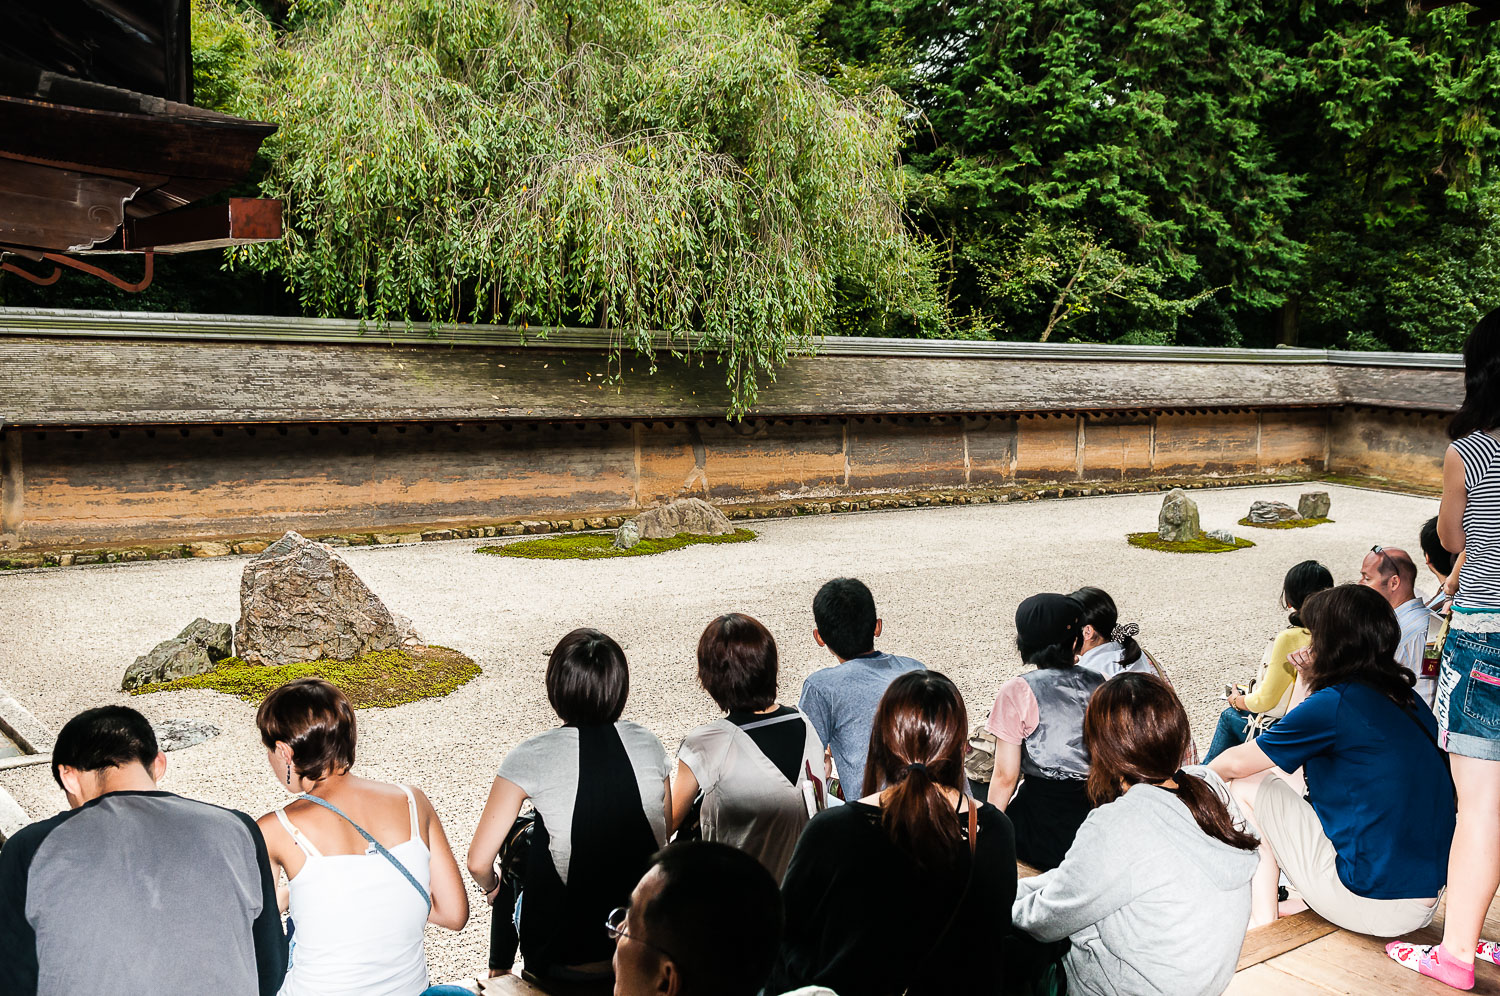 JA080675E-Watching-the-Zen-garden-at-Ryoanji-Temple-in-Kyoto.jpg